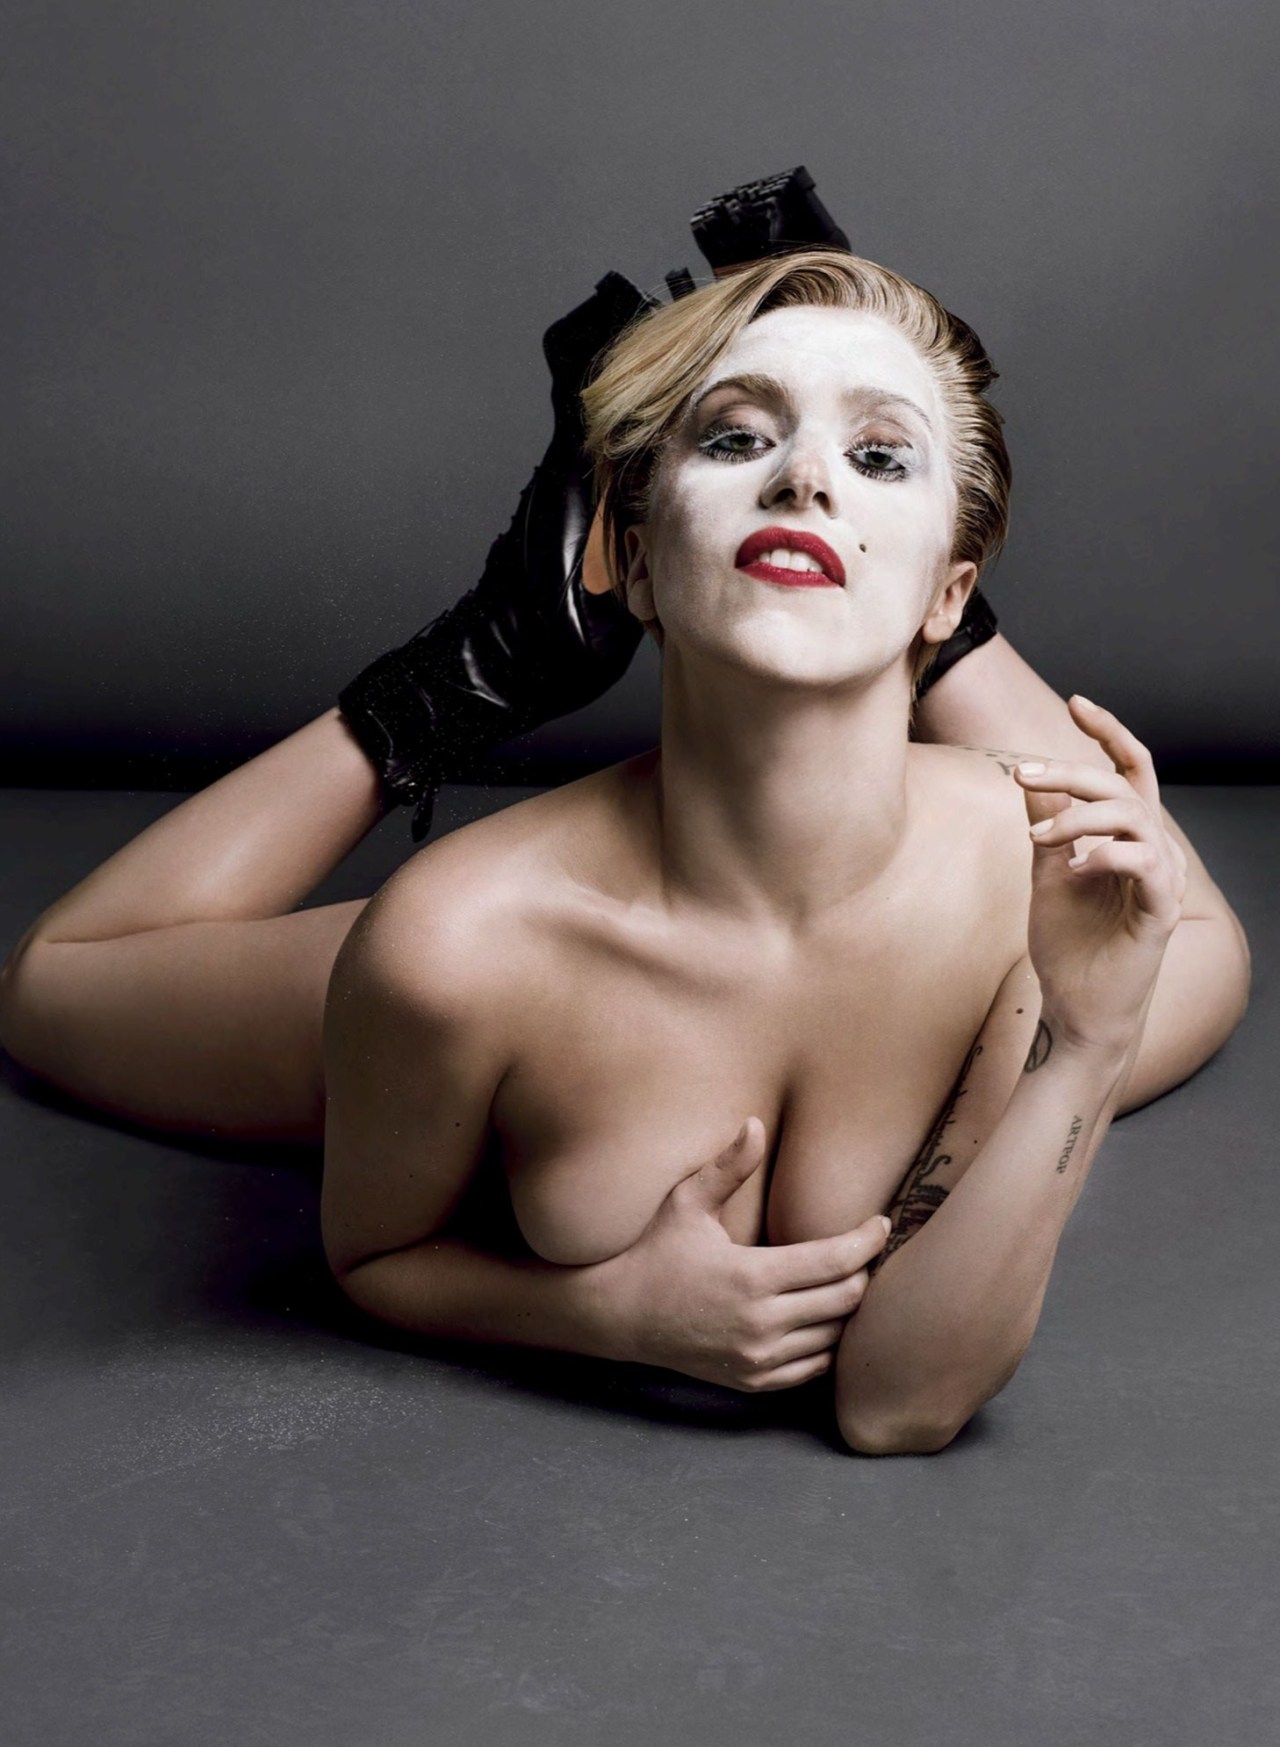 pornwhoresandcelebsluts: Lady Ga Ga topless photoshoot for V Magazine 2013